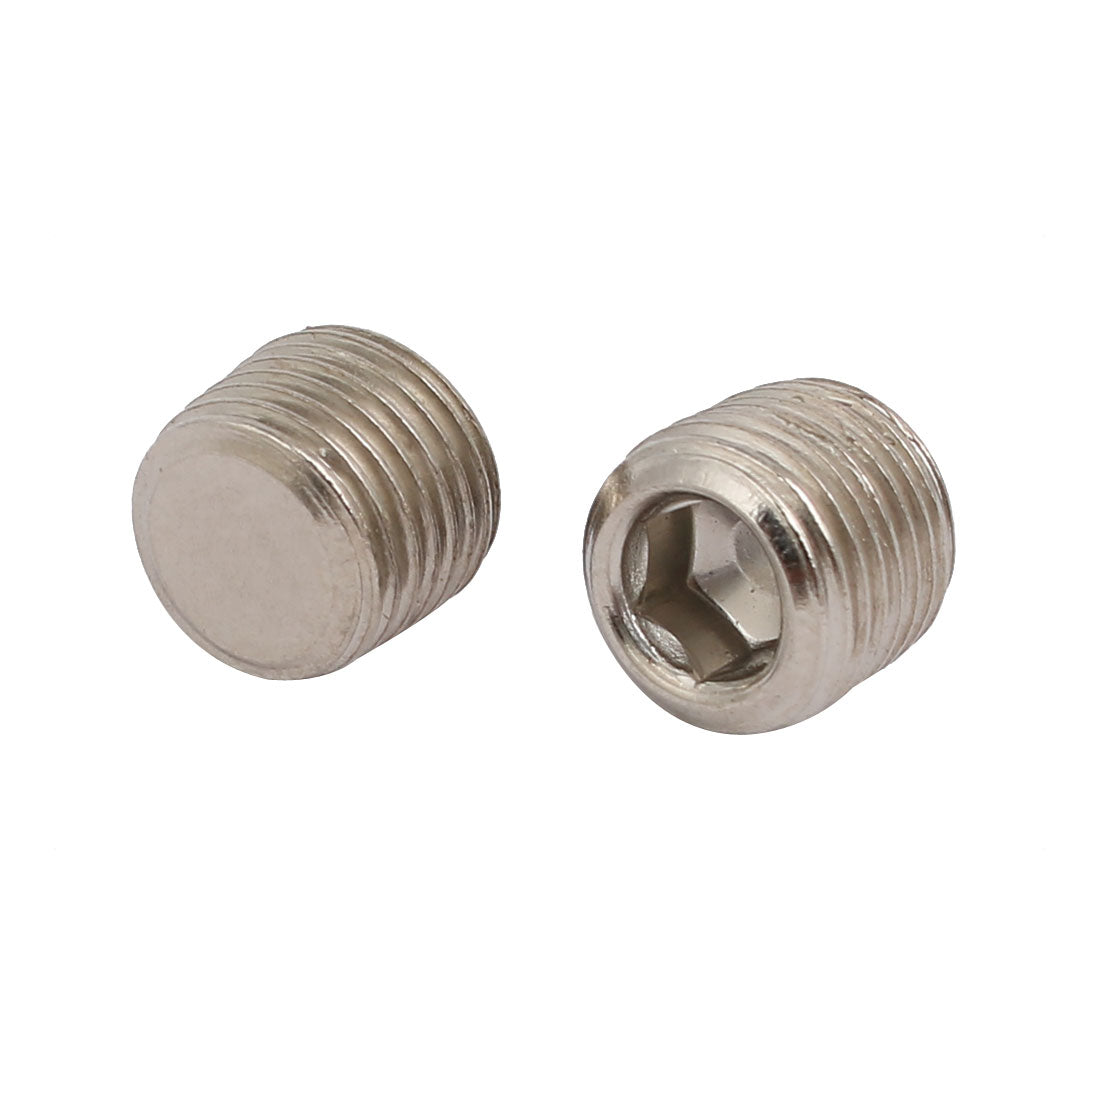 uxcell 1/8-inch Metal Hex Socket Set Flat Point Grub Screws Silver